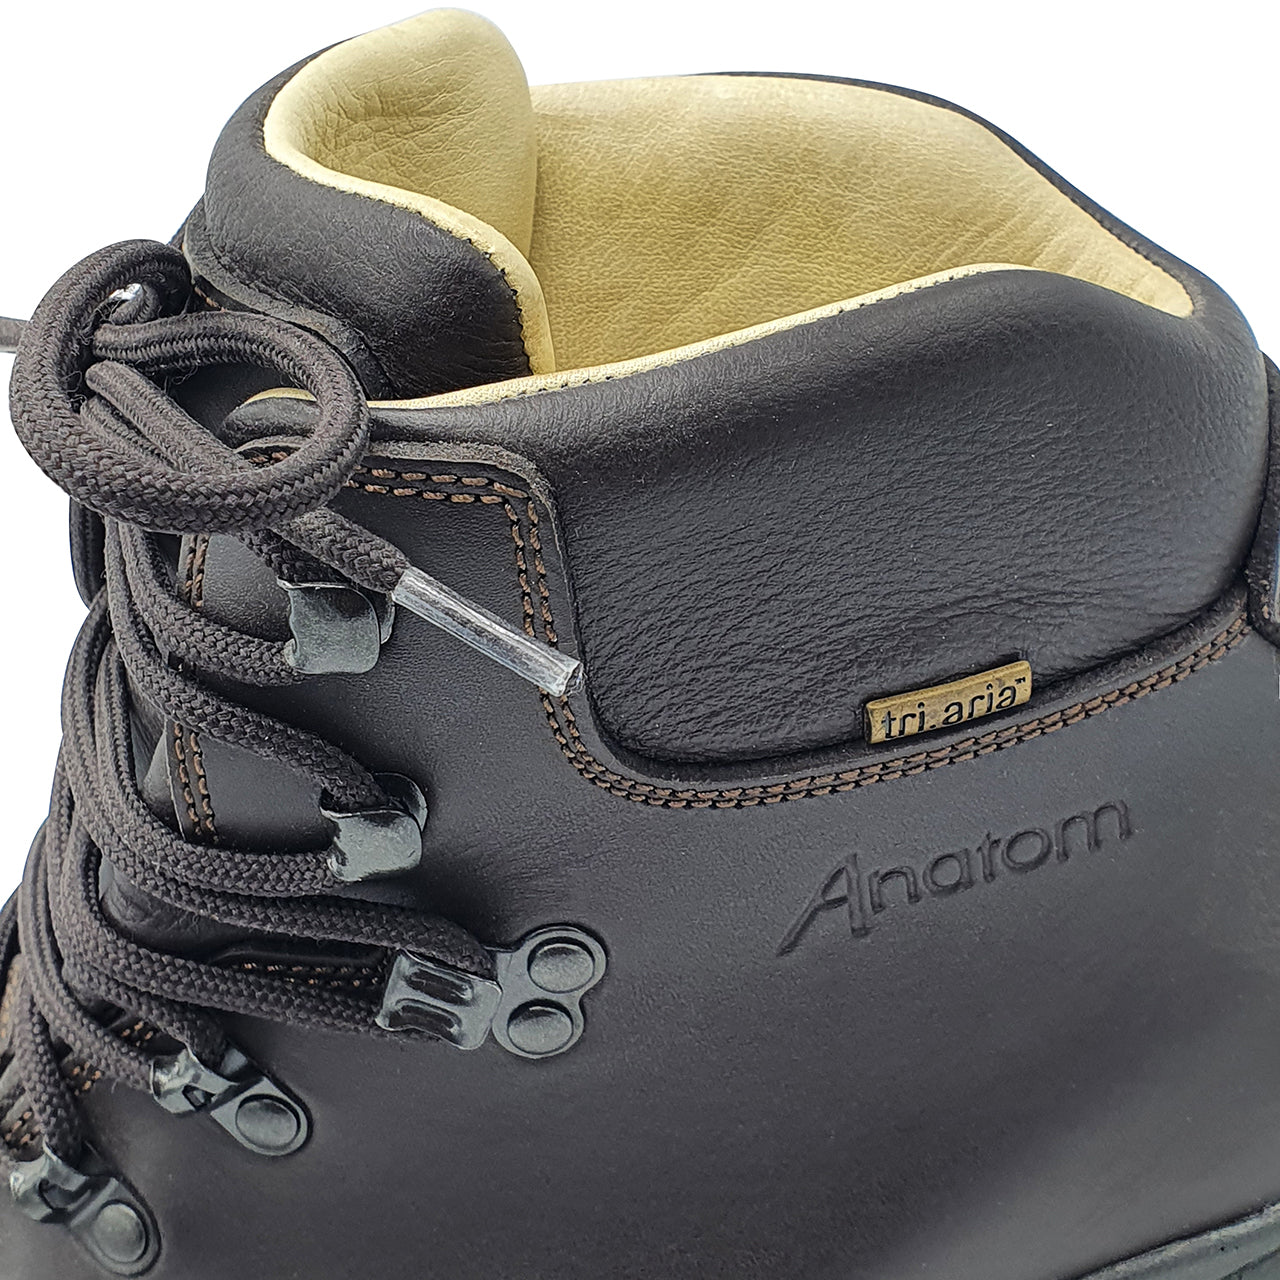 ANATOM Q3 Braeriach Comfort Trekking Boots with Vibram outsole.